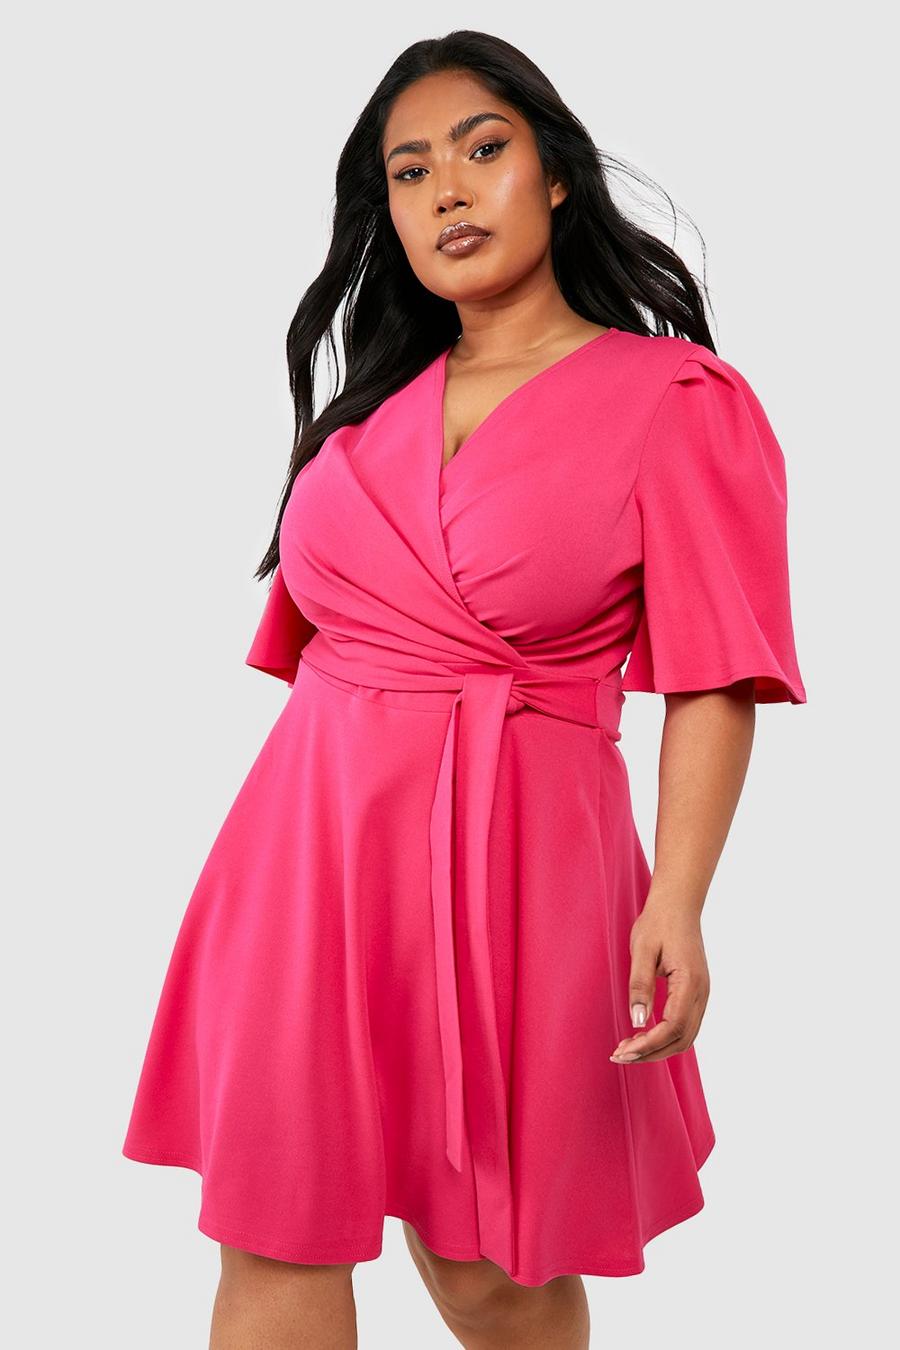 Grande taille - Robe portefeuille à manches larges et ceinture, Hot pink rose